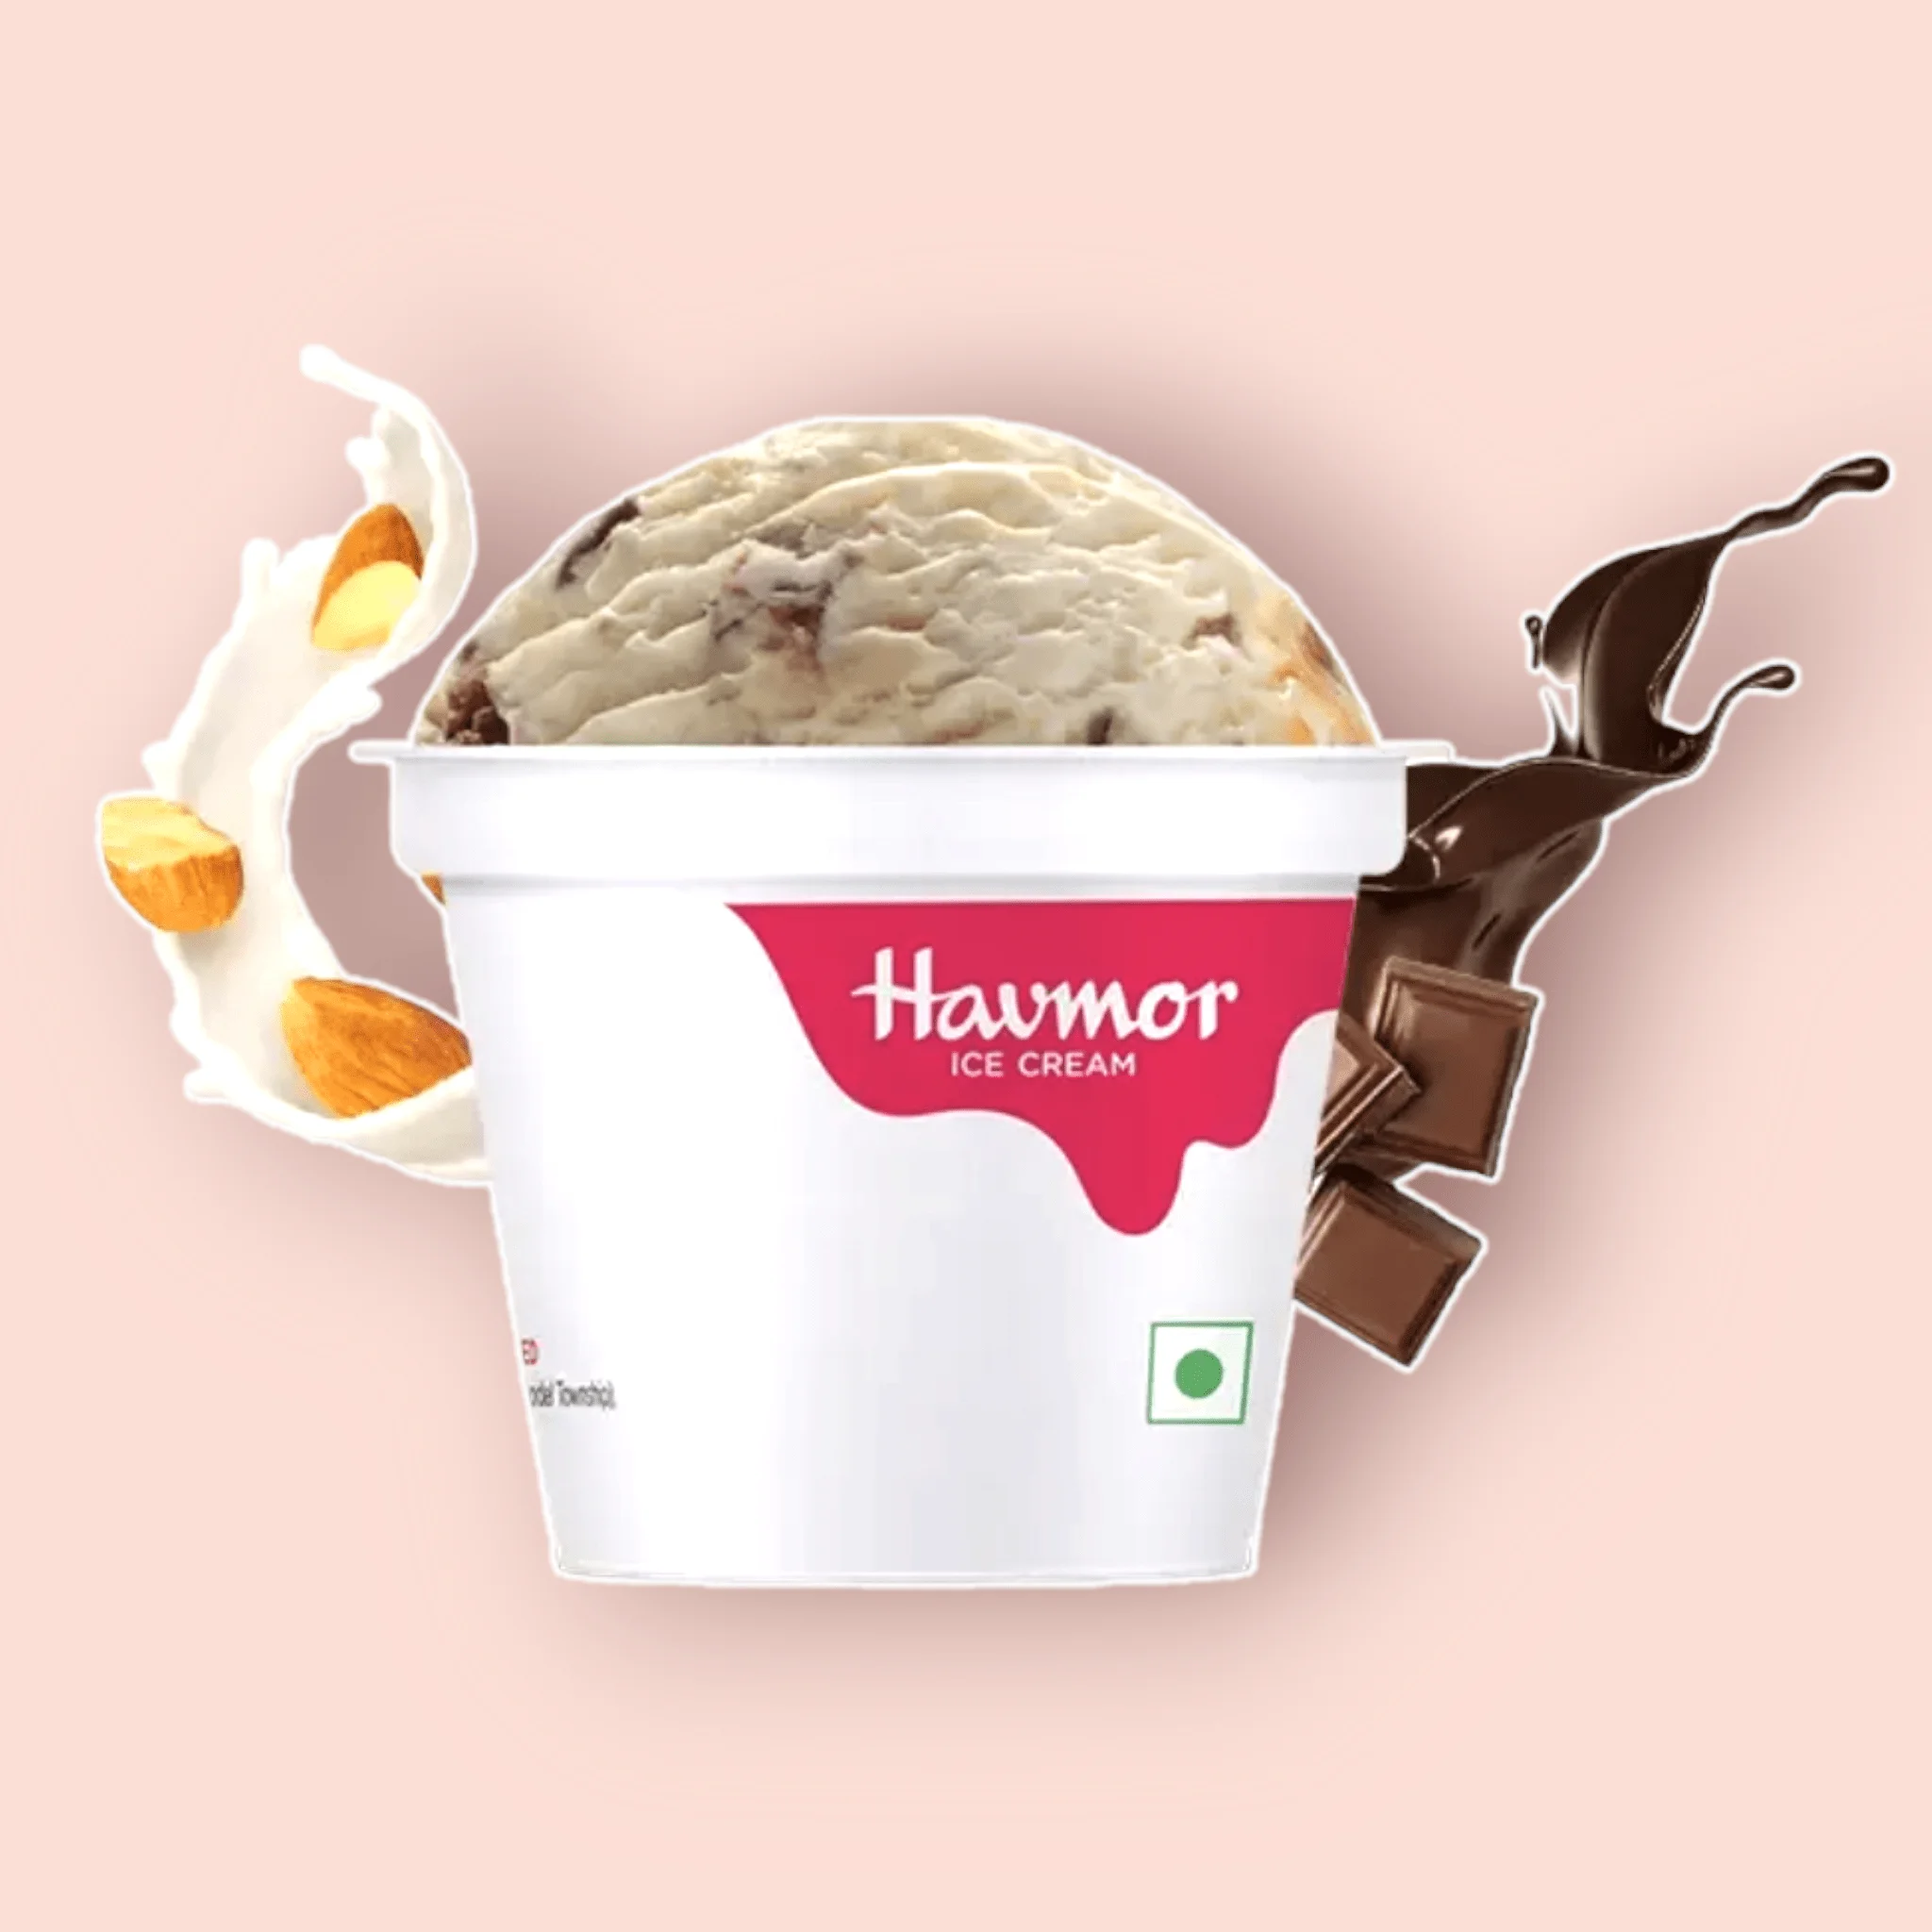 Havmore Ice Cream | Adgully.com